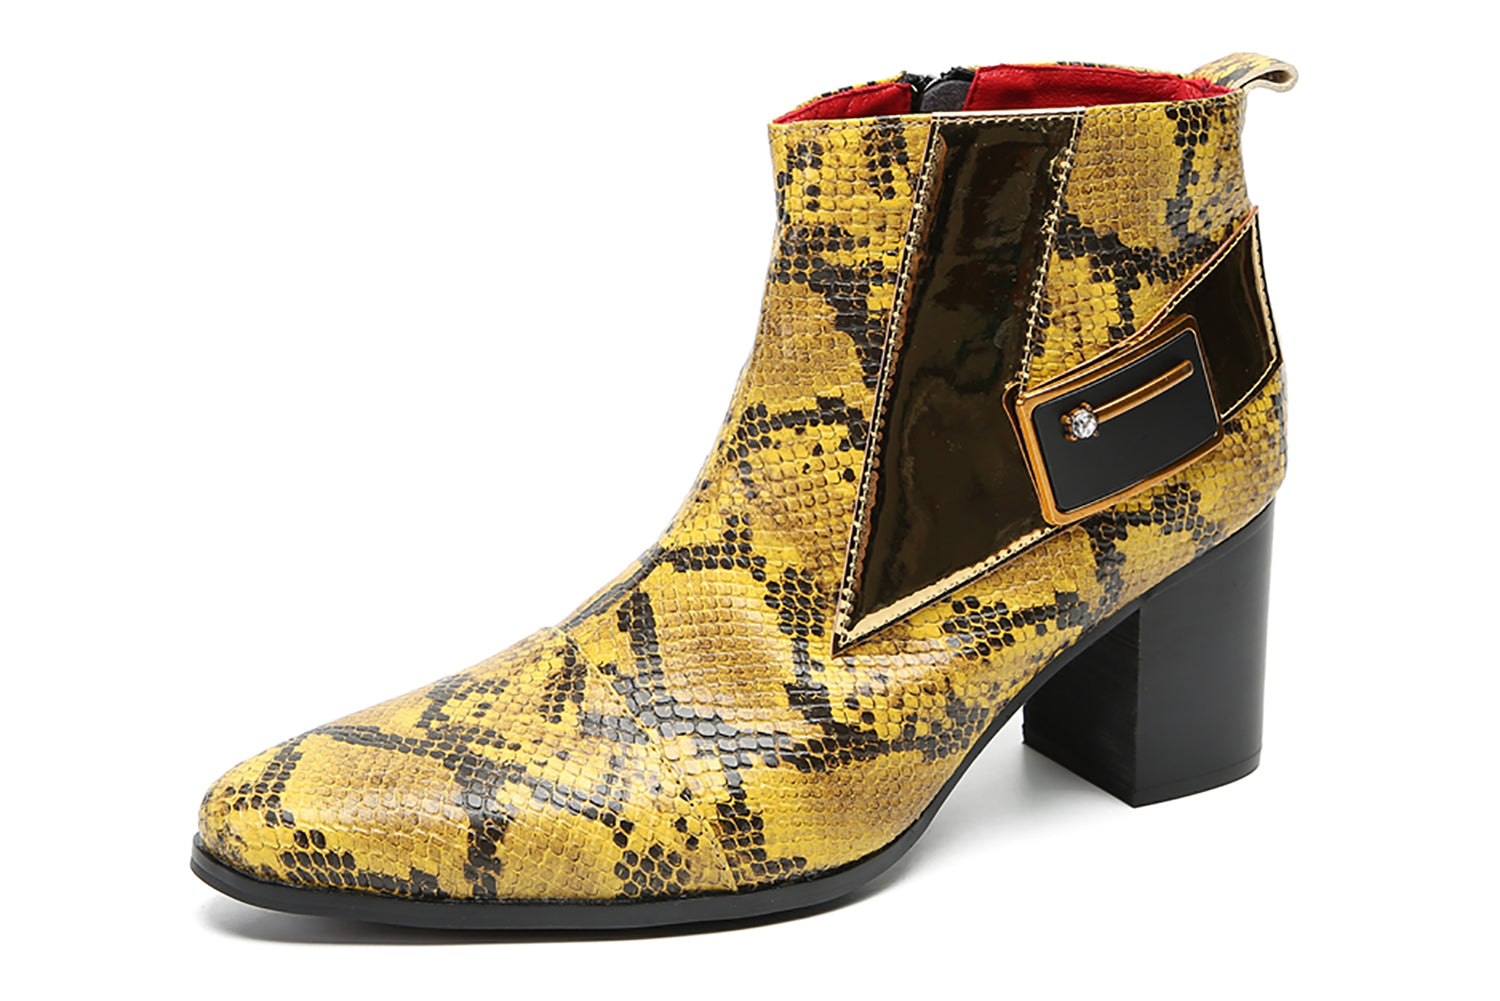 Men's Hight Top Snakeskin Texture Western Boots